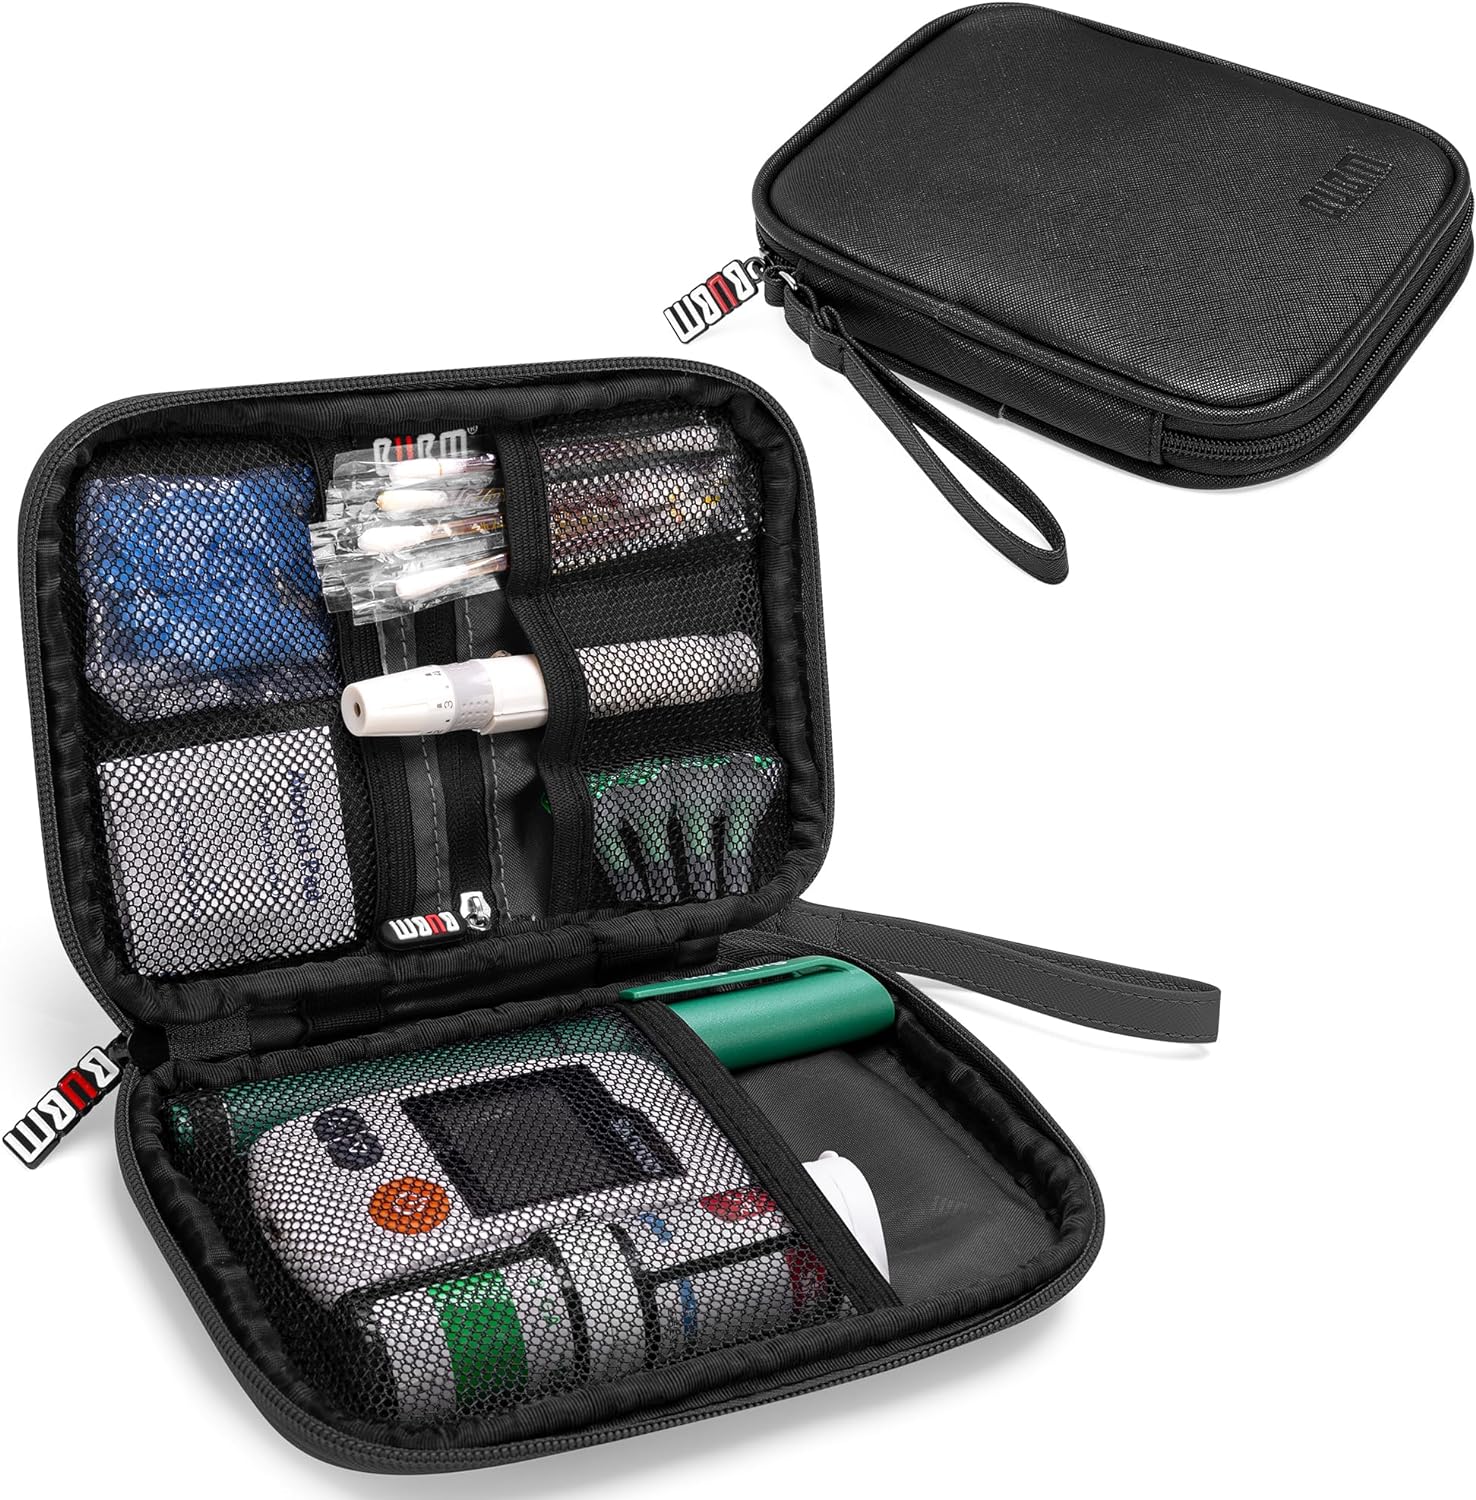 Diabetic Bag for Insulin Pen and Glucose Meter, Diabetes Bag for Diabetic Supplies, Black (Bag Only), Black